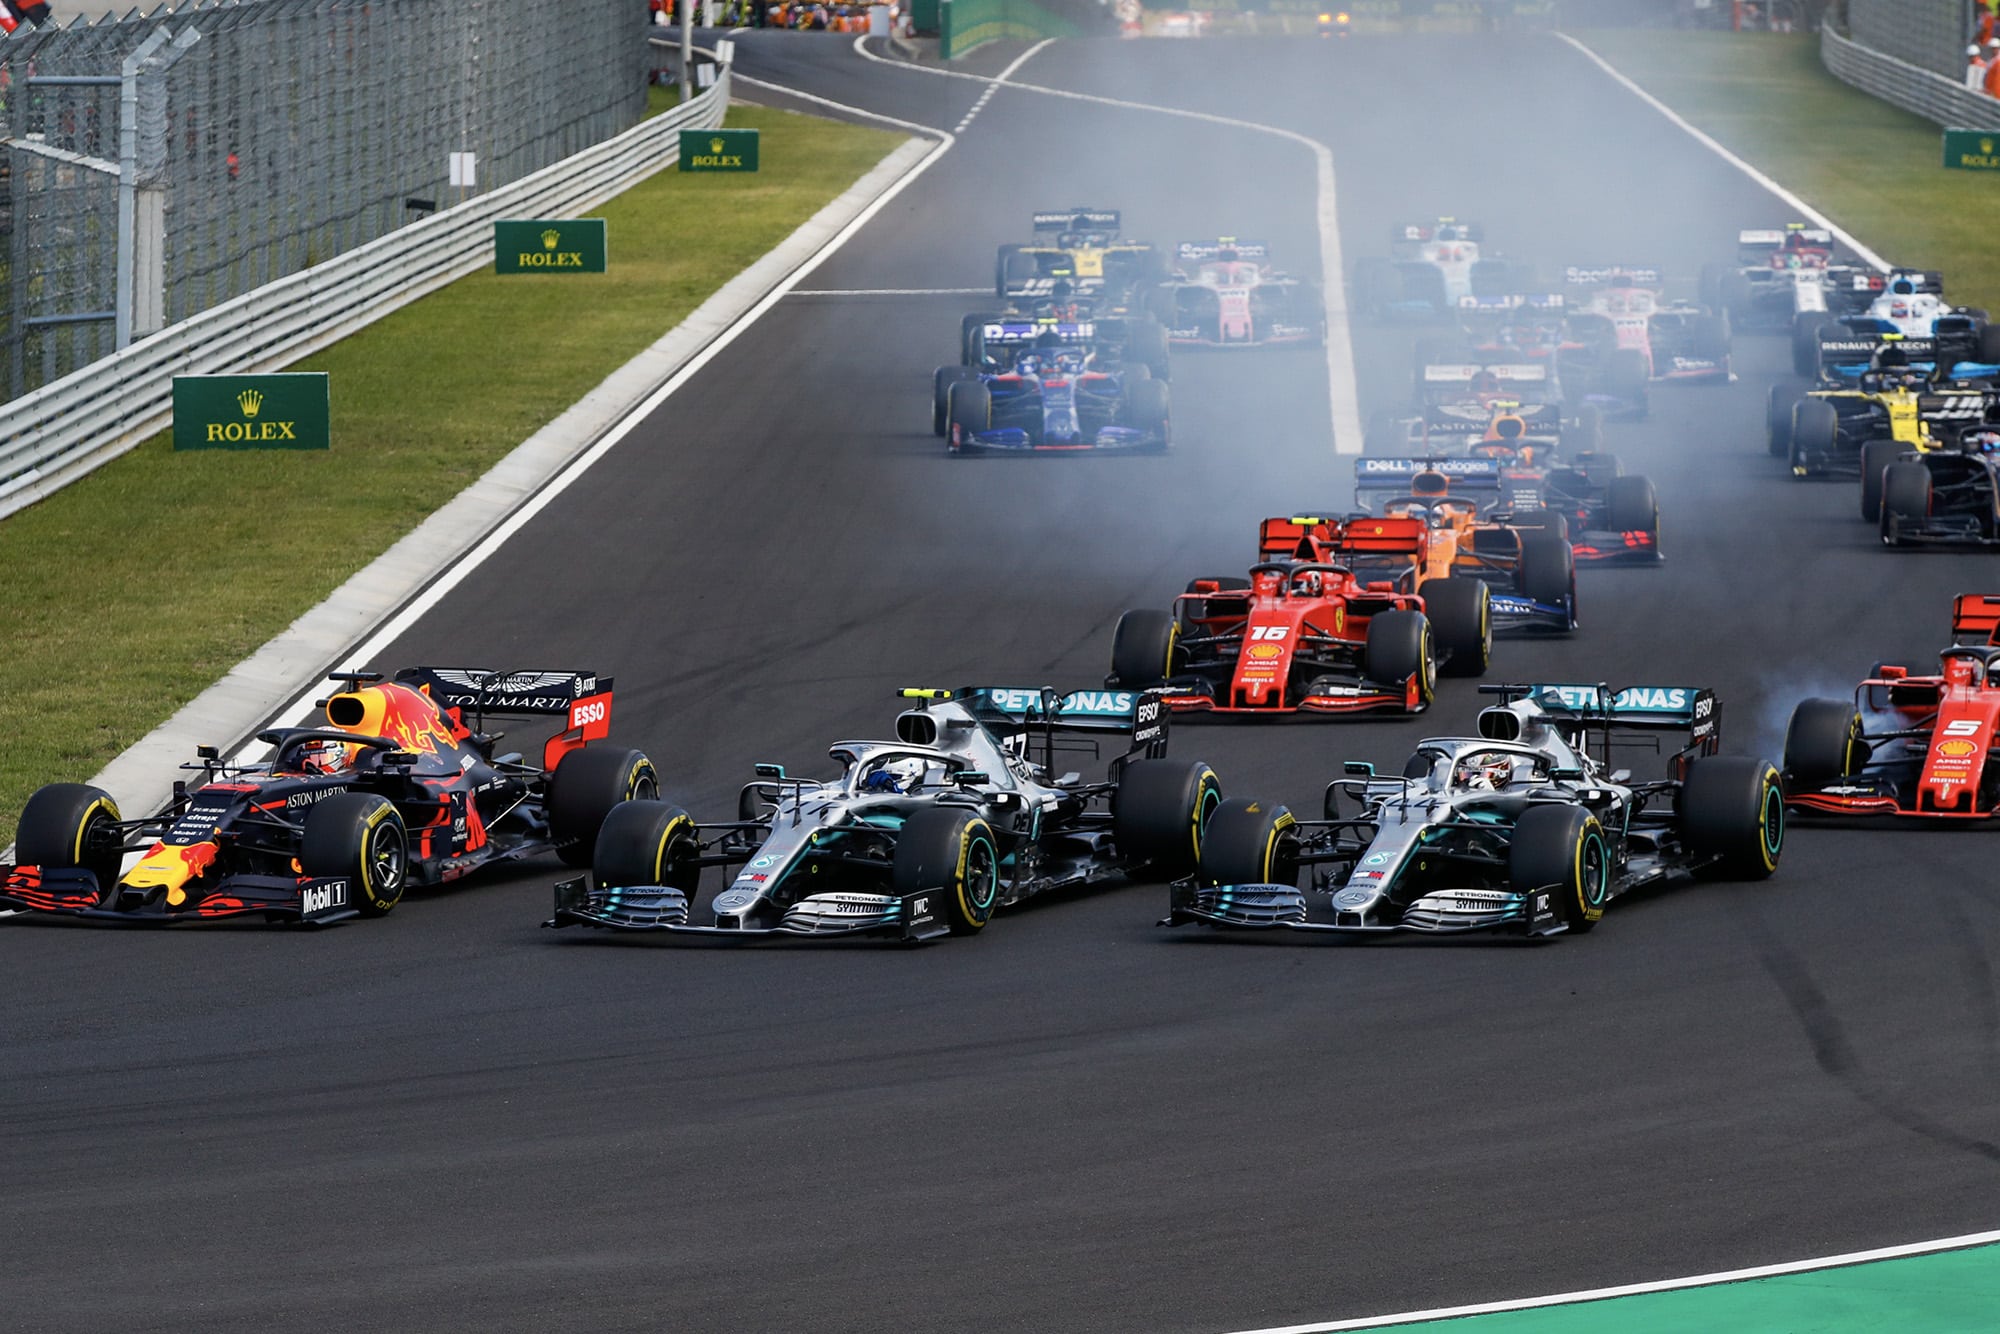 Sao Paulo Formula E race postponed to 2019